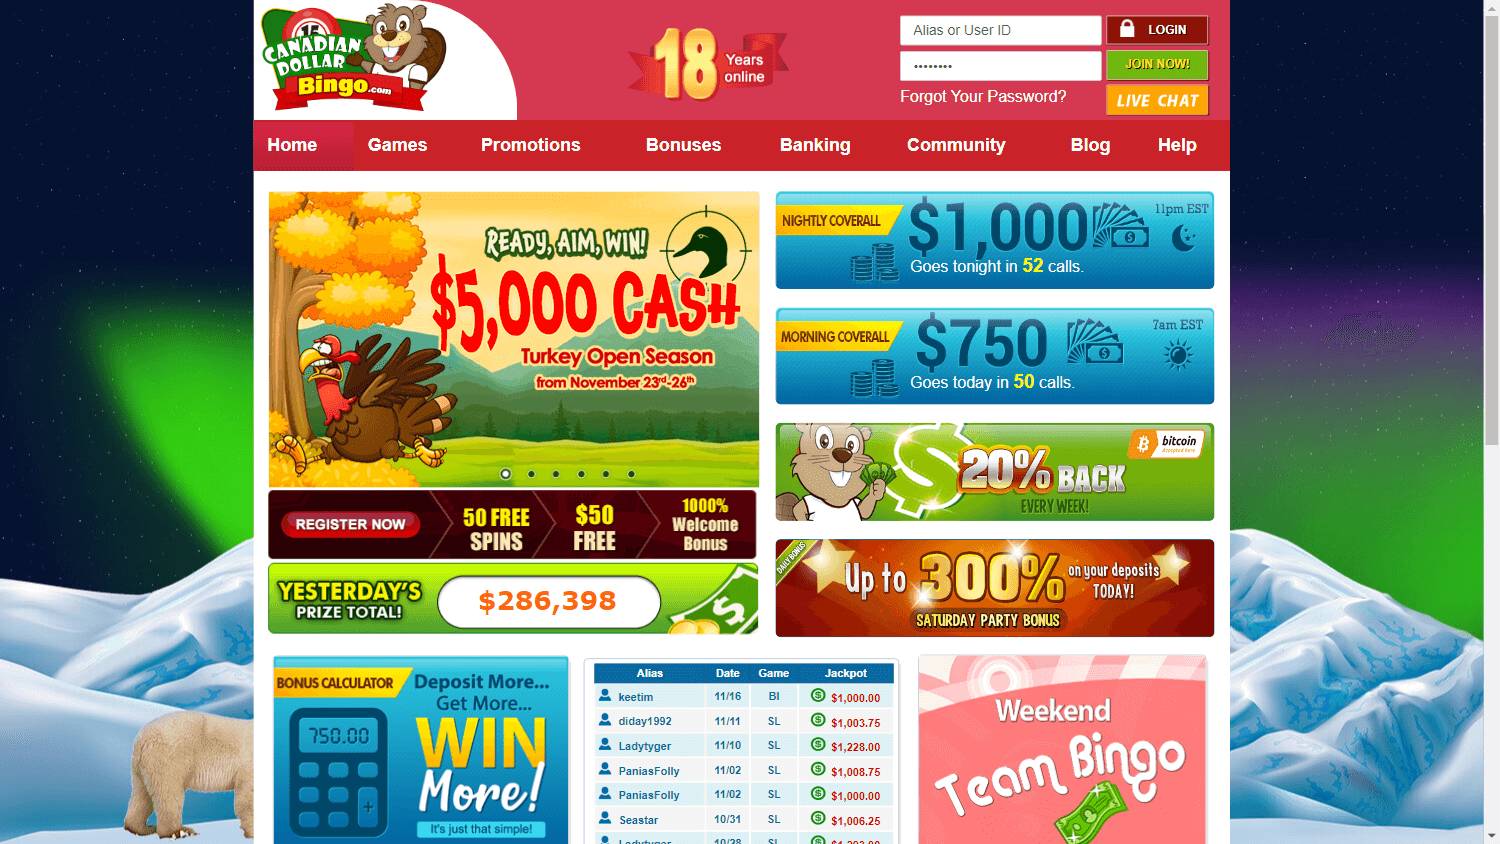 canadian_dollar_bingo_casino_homepage_desktop